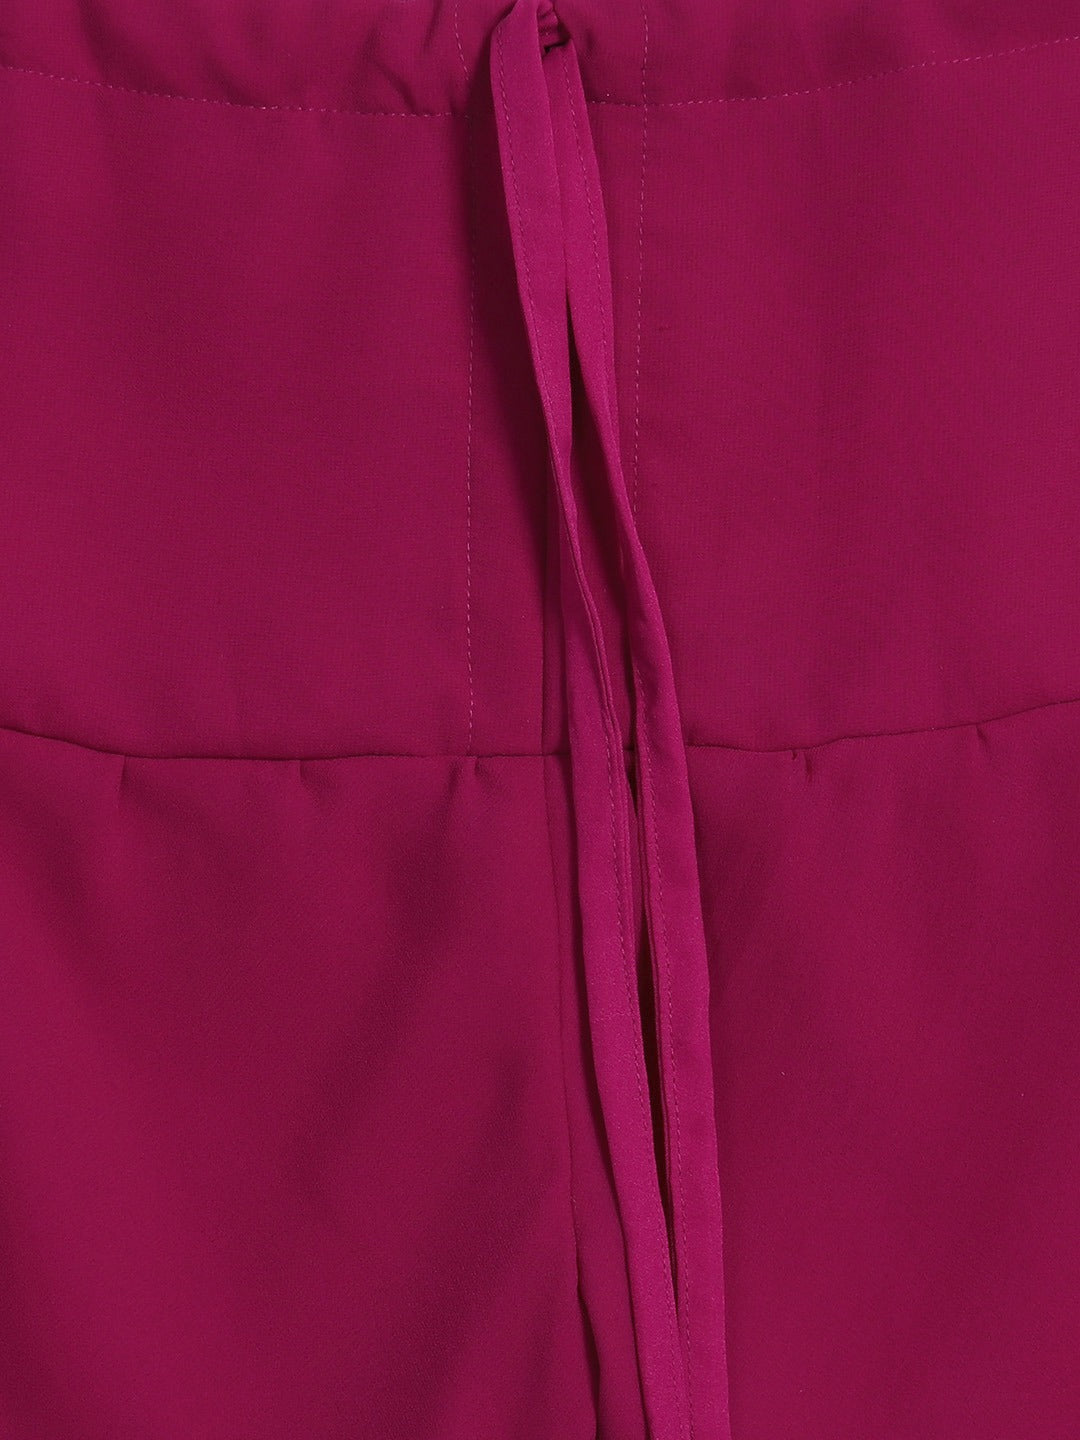 Pink-&-Magenta-Purple-Anarkali-Suit